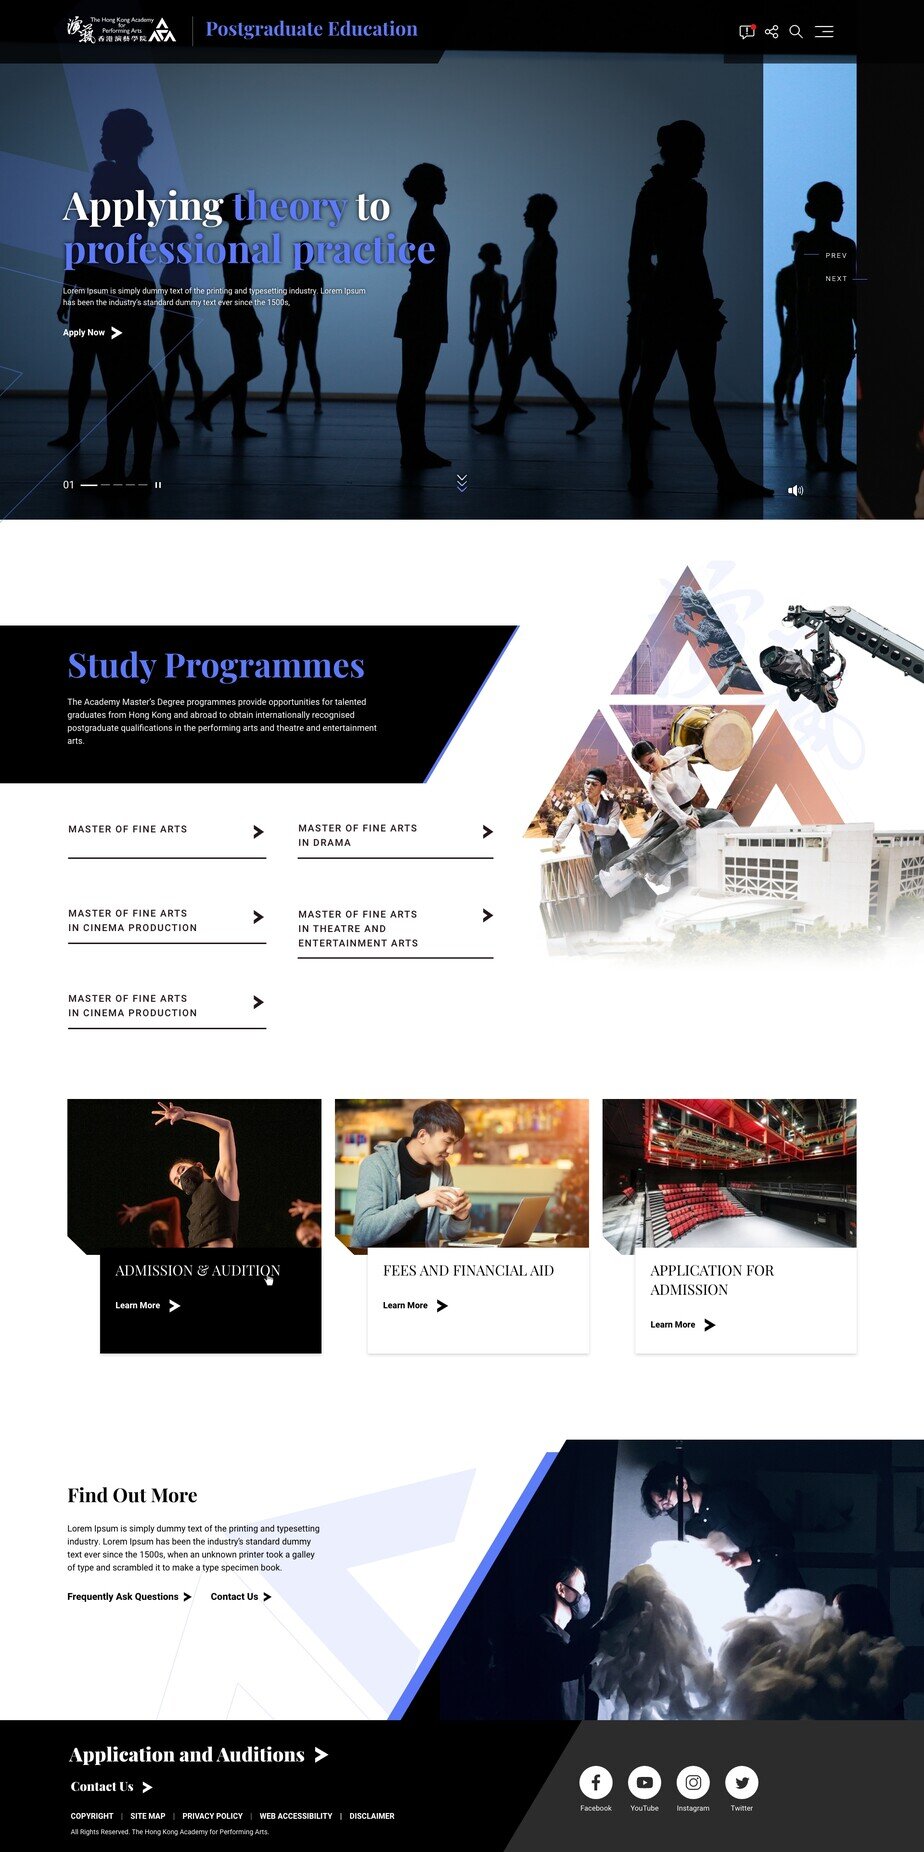 HKAPA - Postgraduate Studies Desktop